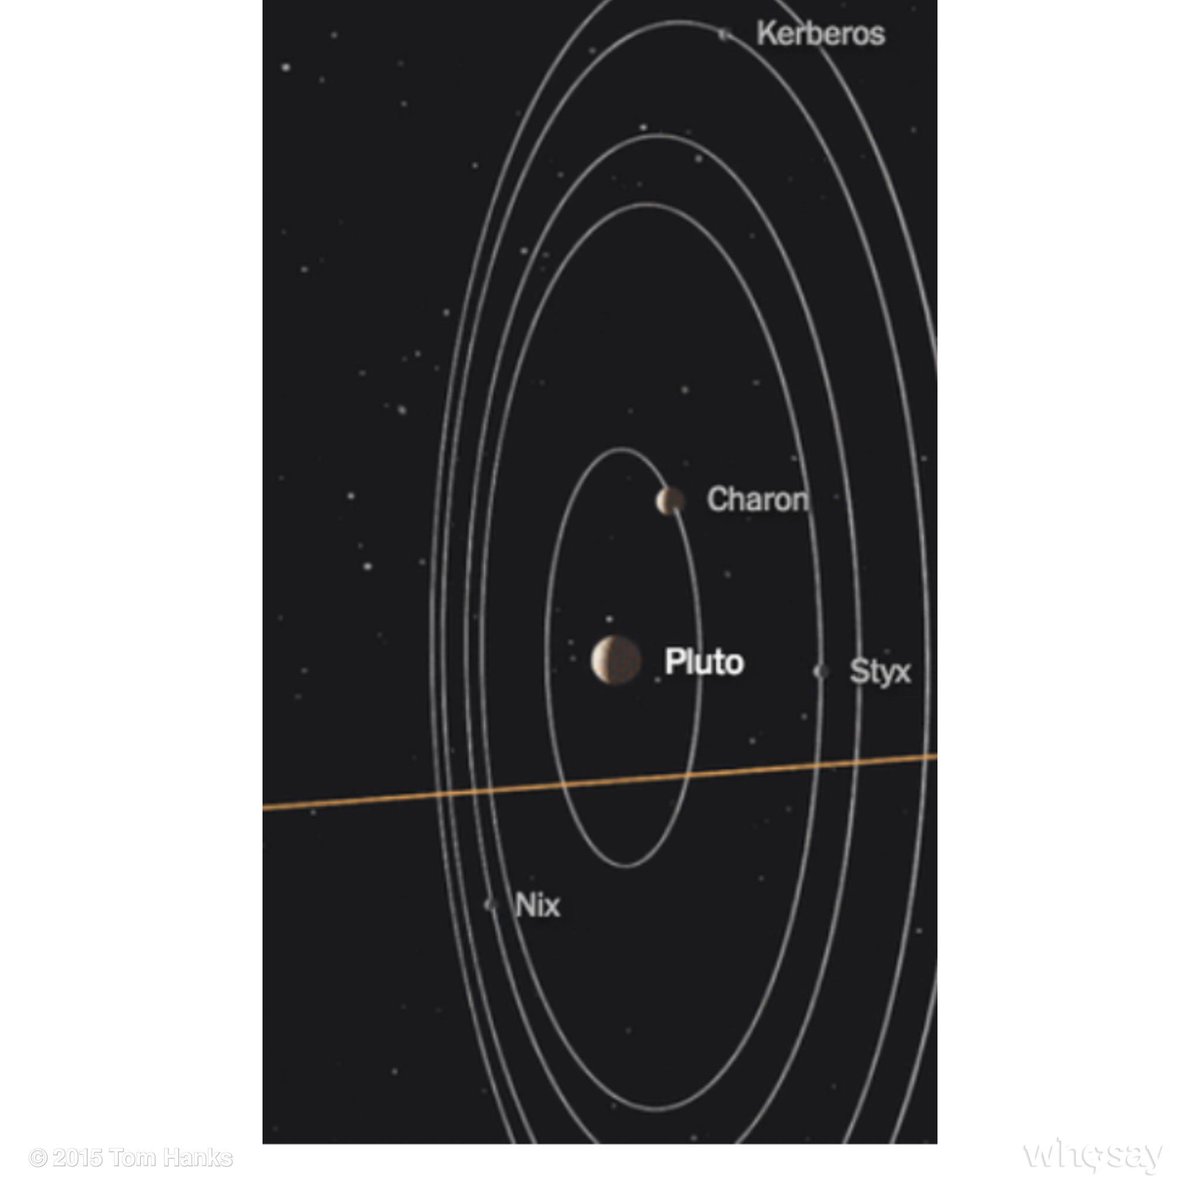 Some bullseye!  NASA nails Pluto. Talk about New Horizons! Next up the Planet Vulcan?  Hanx http://t.co/pgyC4L2FBJ